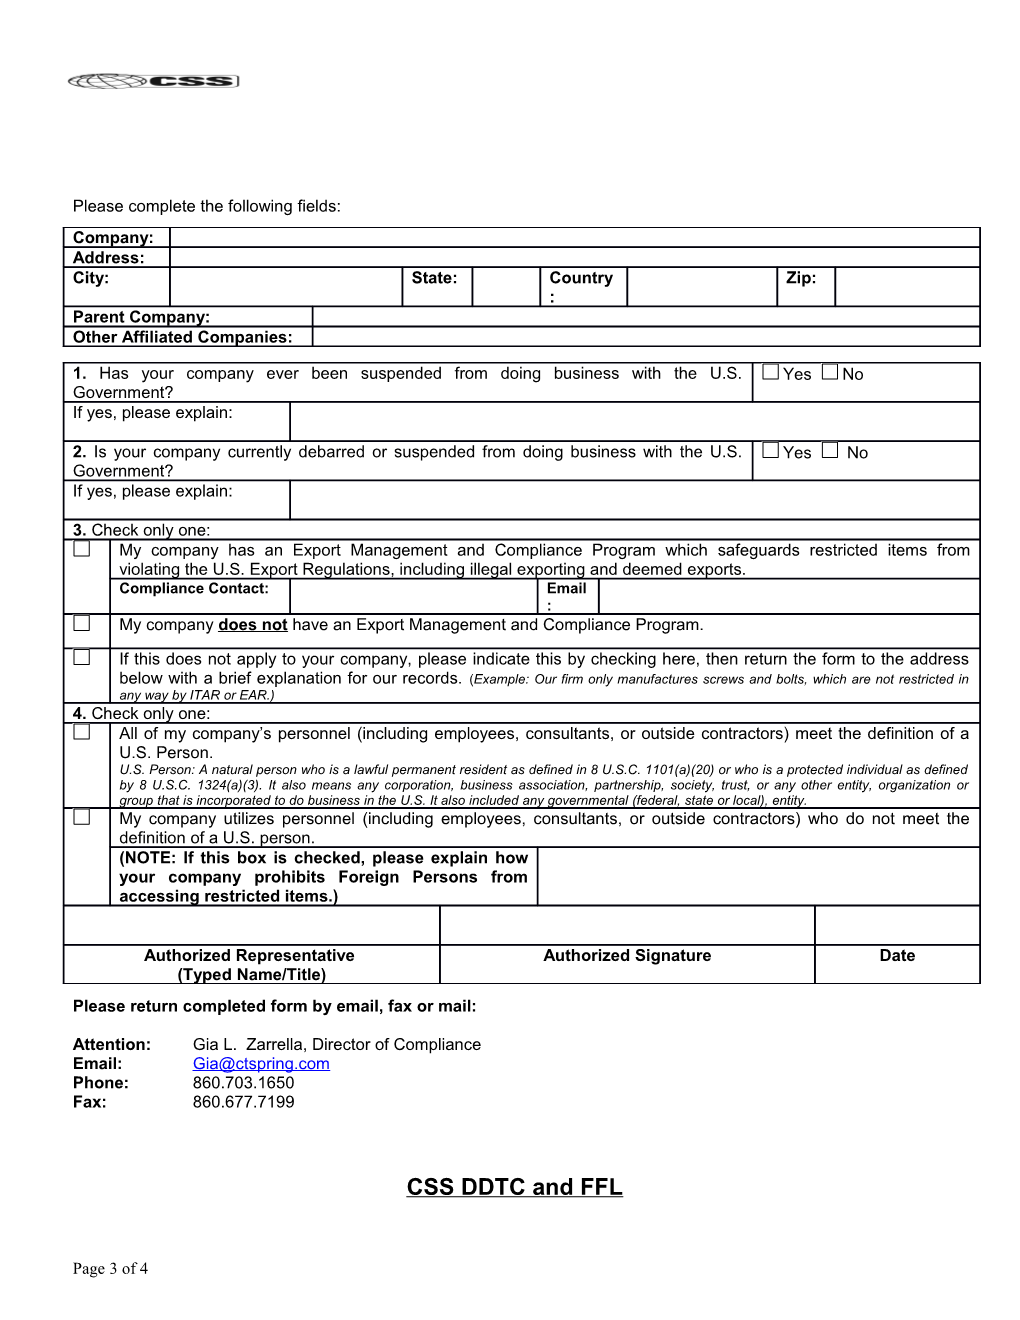 ITAR / EAR Compliance Documentation & Annual Vendor/Supplier Profile